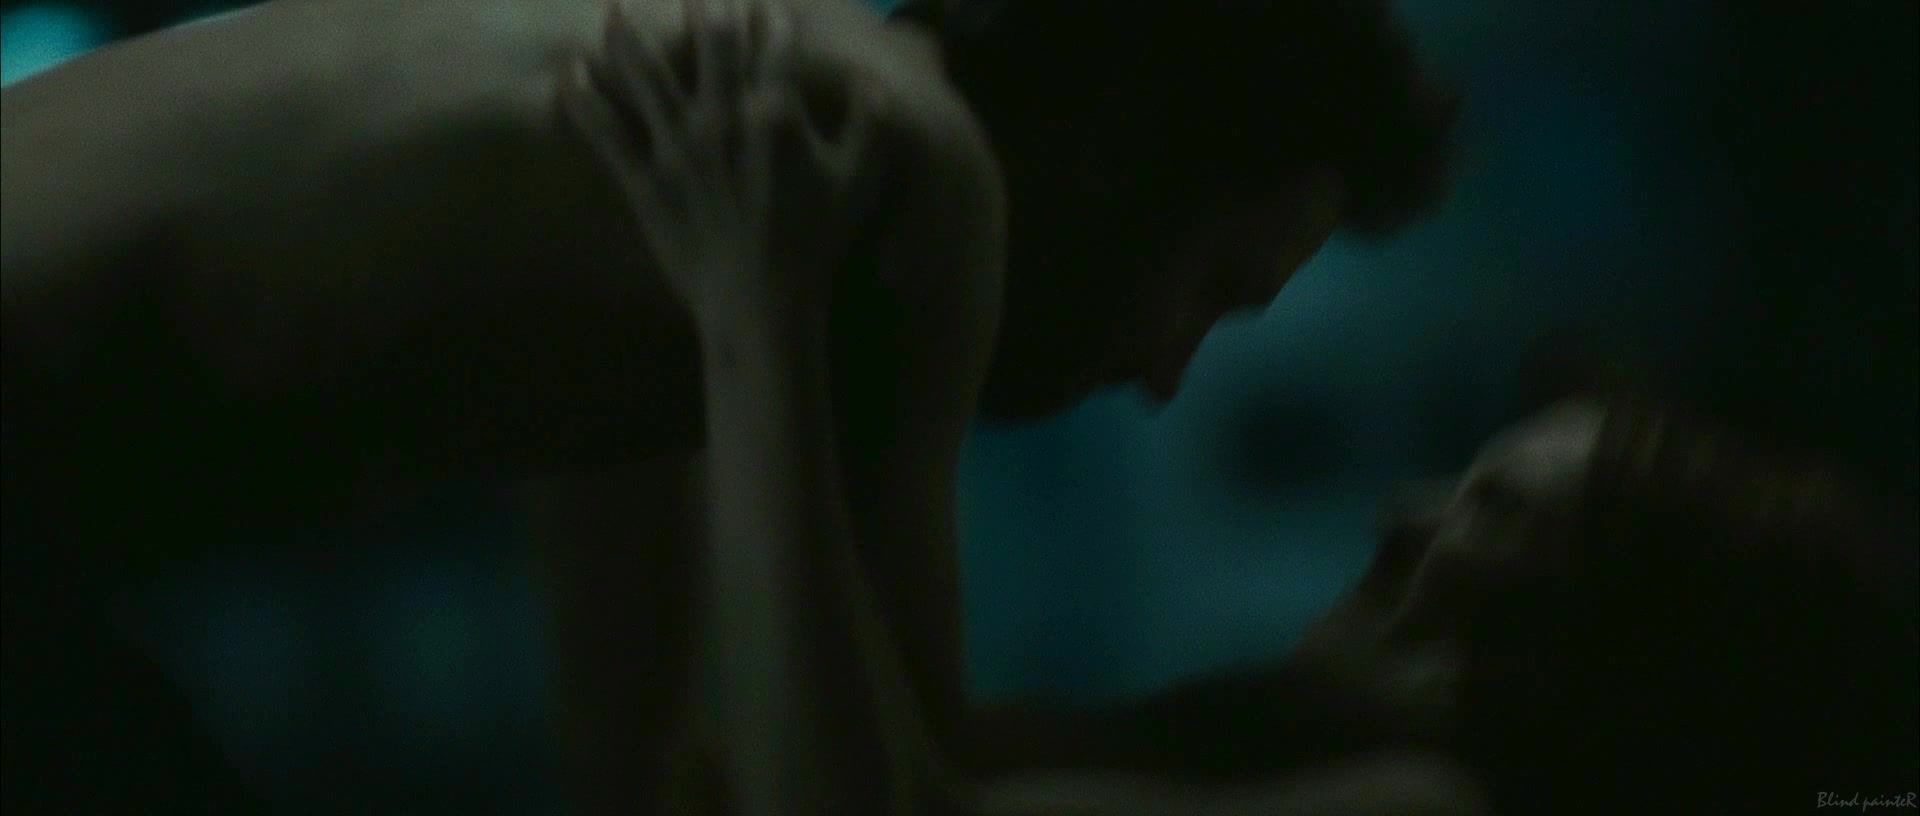 Free 18 Year Old Porn Lauren Lee Smith nude - Pathology (2008) GamCore - 1